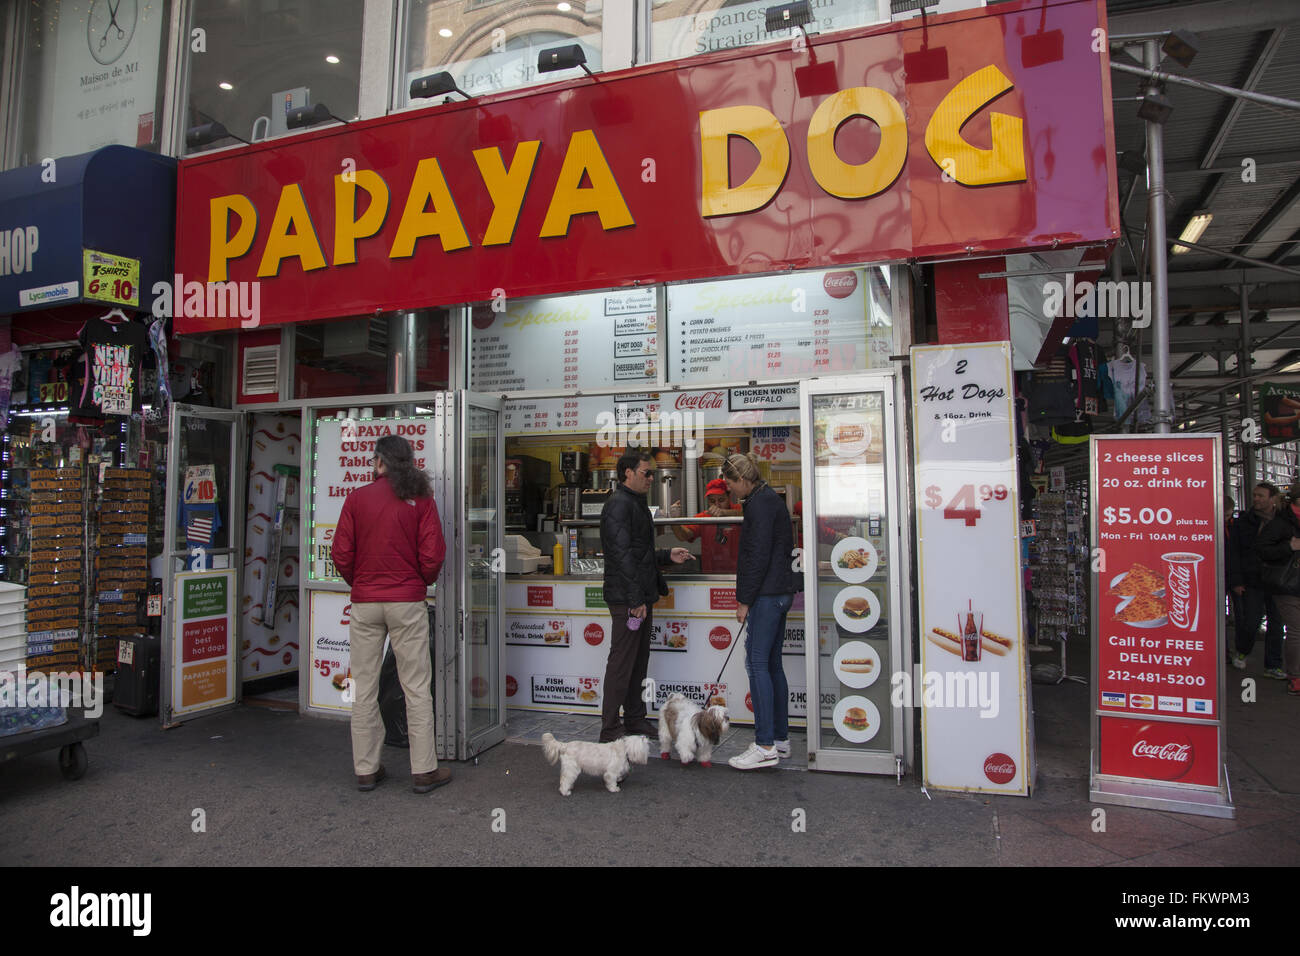 Papaya Hund eine beliebte Fast-Food Take away Gelenk in Midtown Manhattan  Stockfotografie - Alamy